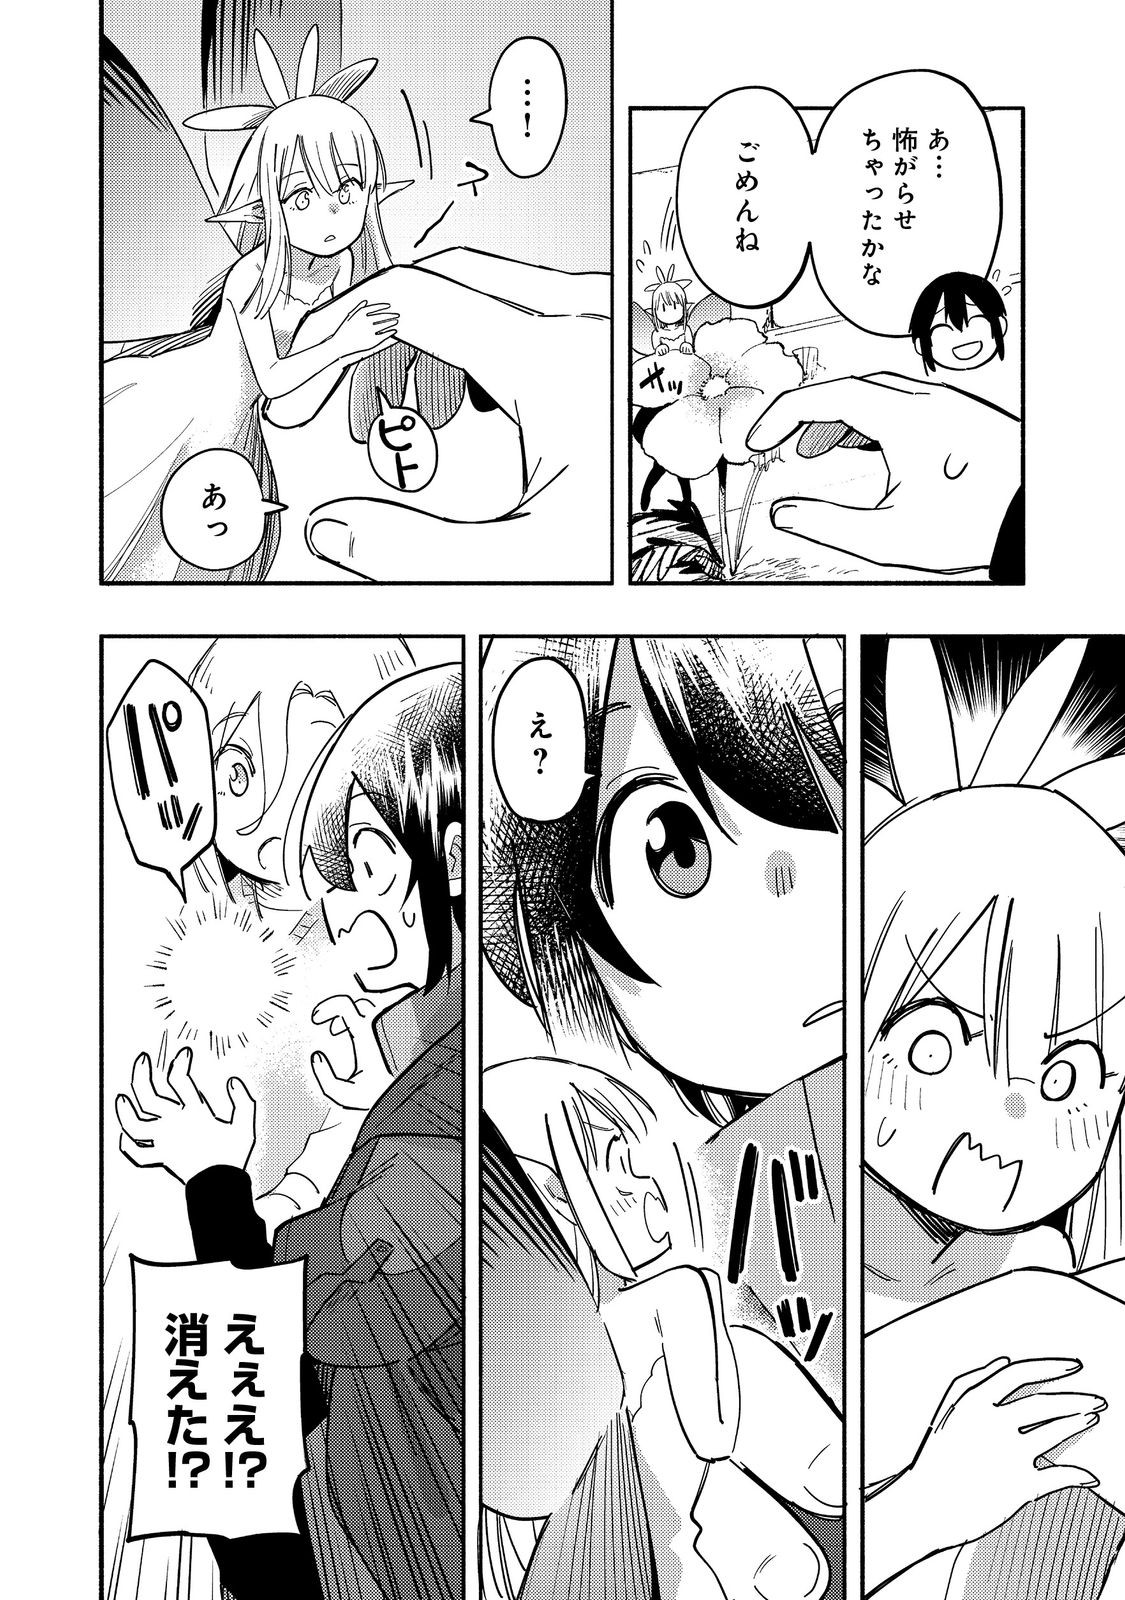 Kyou mo E ni Kaita Mochi ga Umai - Chapter 27 - Page 10